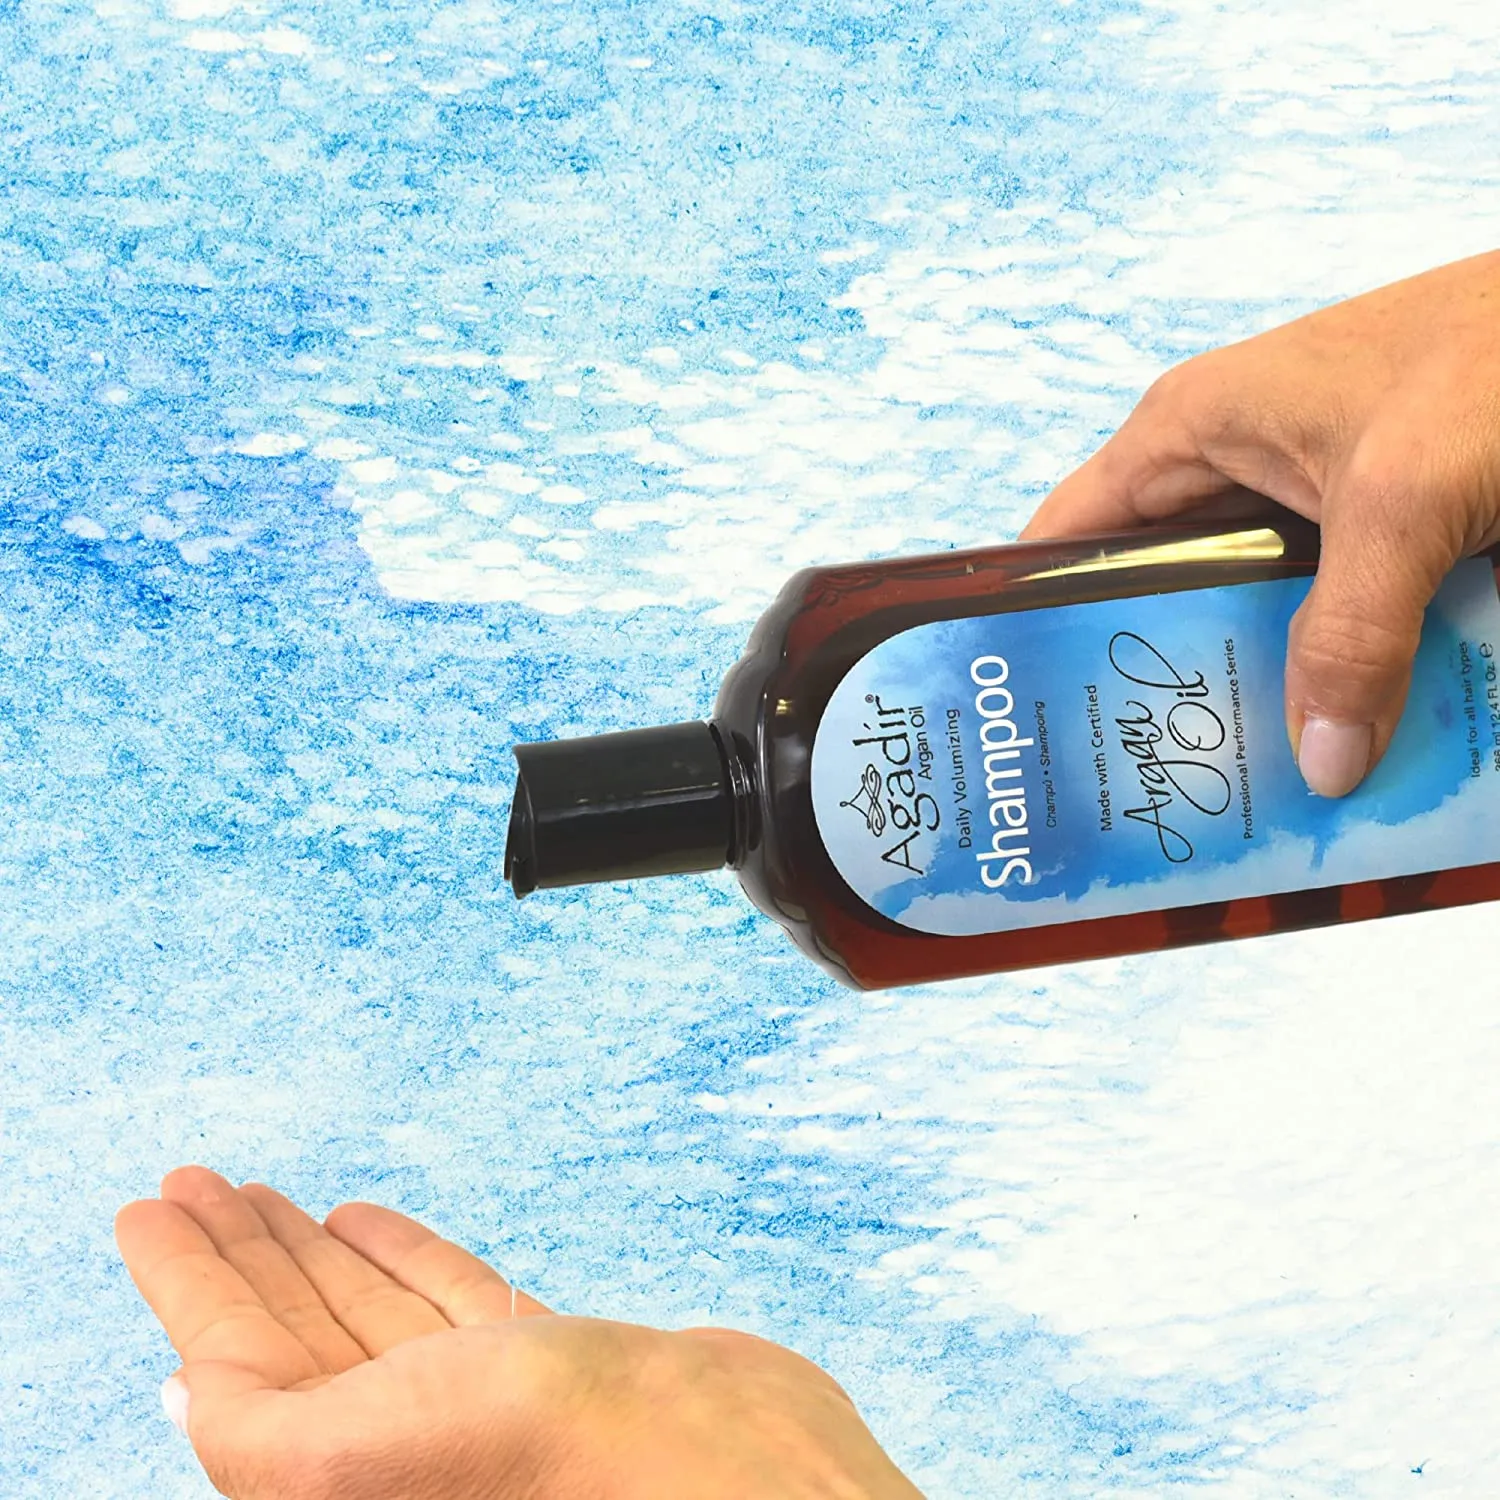 Argan Oil Daily Volumizing Shampoo 366 ml